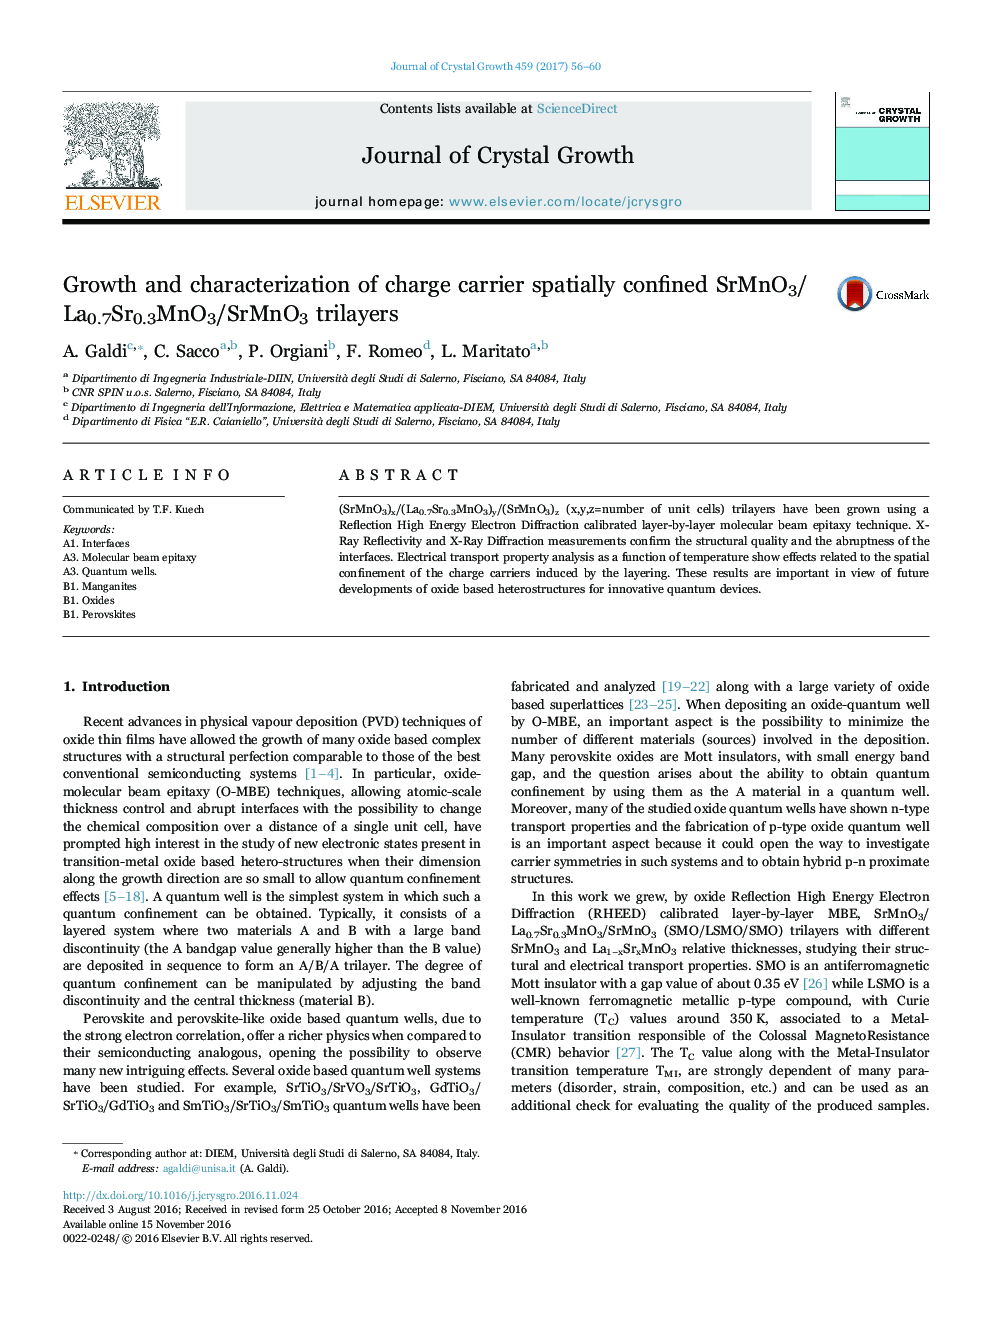 Growth and characterization of charge carrier spatially confined SrMnO3/La0.7Sr0.3MnO3/SrMnO3 trilayers